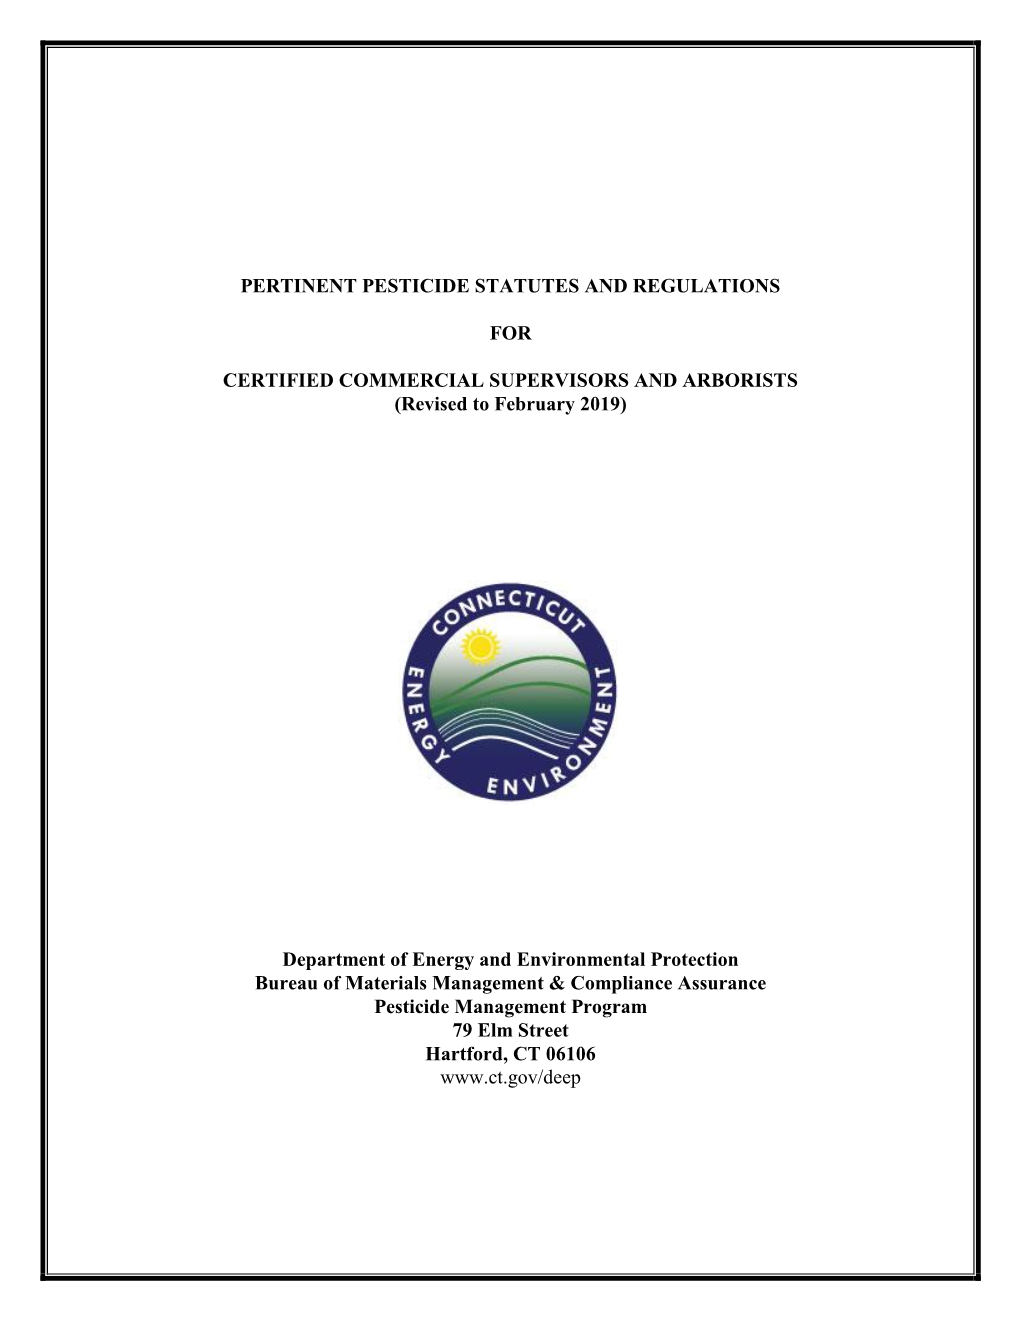 Pertinent Pesticides Statutes and Regulations